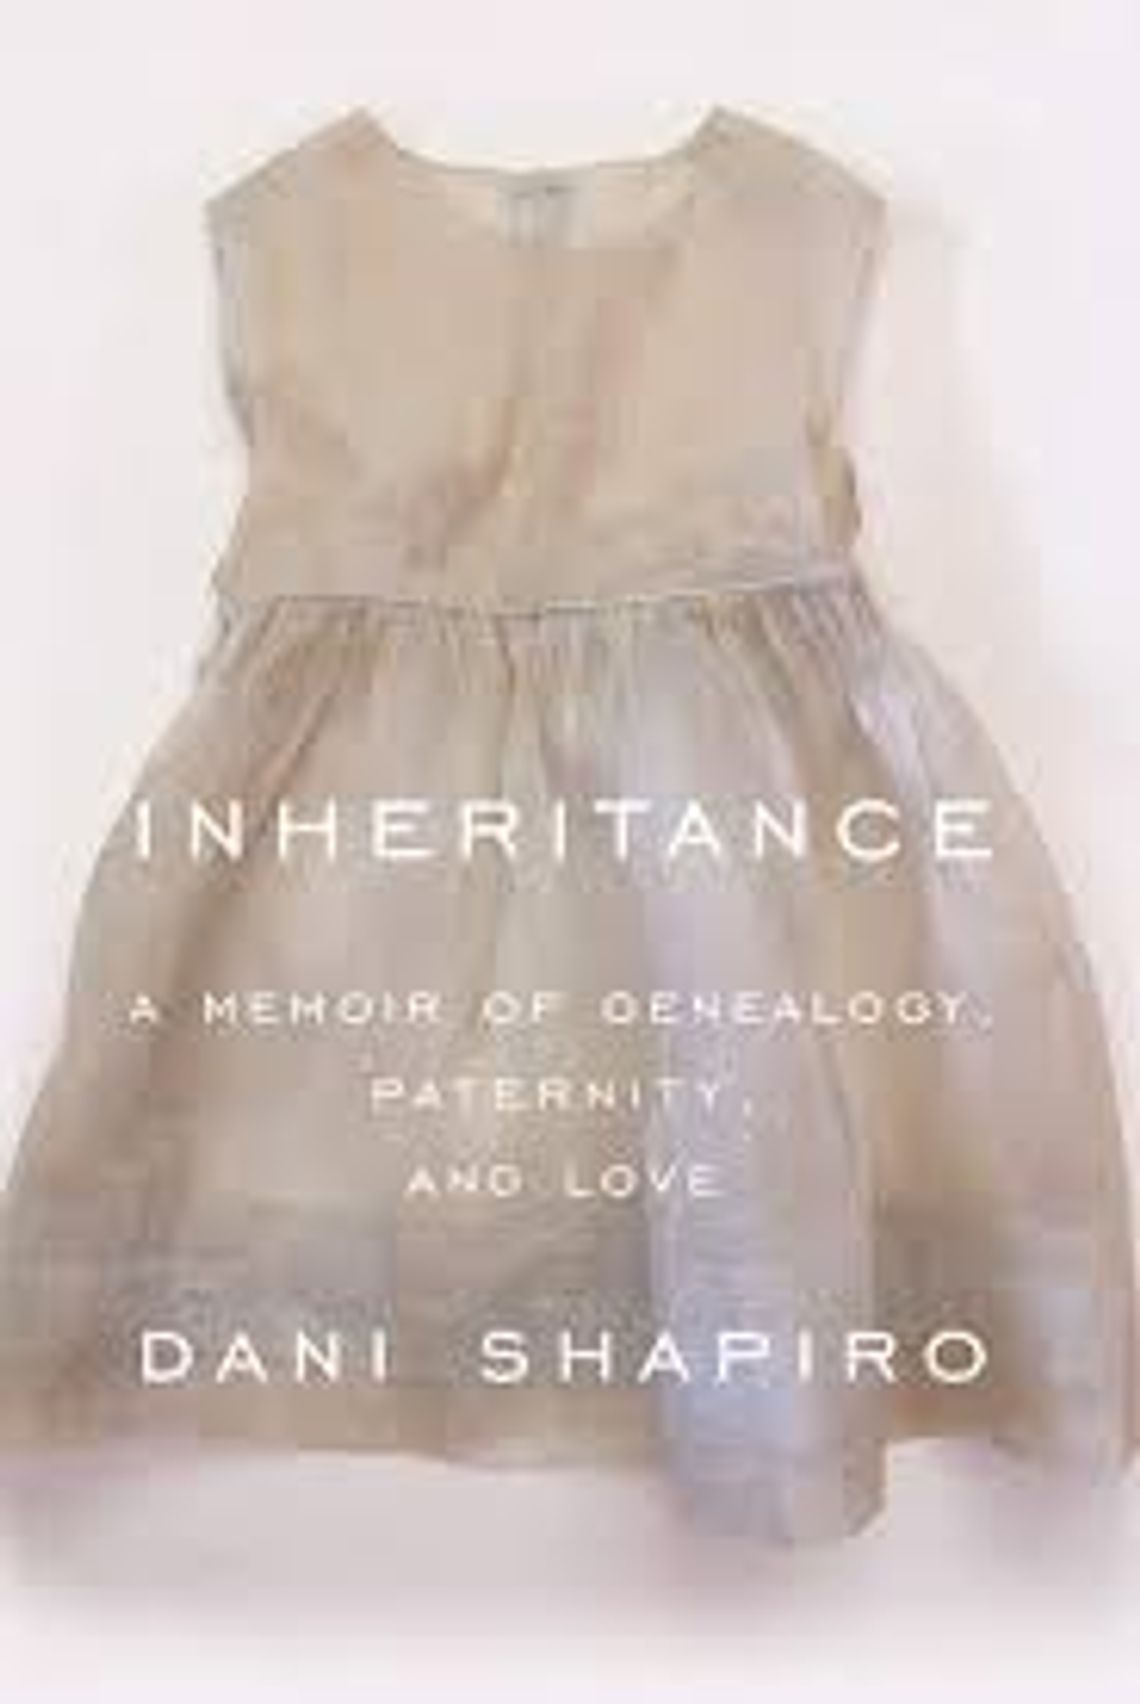 Inheritance: A memoir of Genealogy, Paternity, and Love by Dani Shapiro